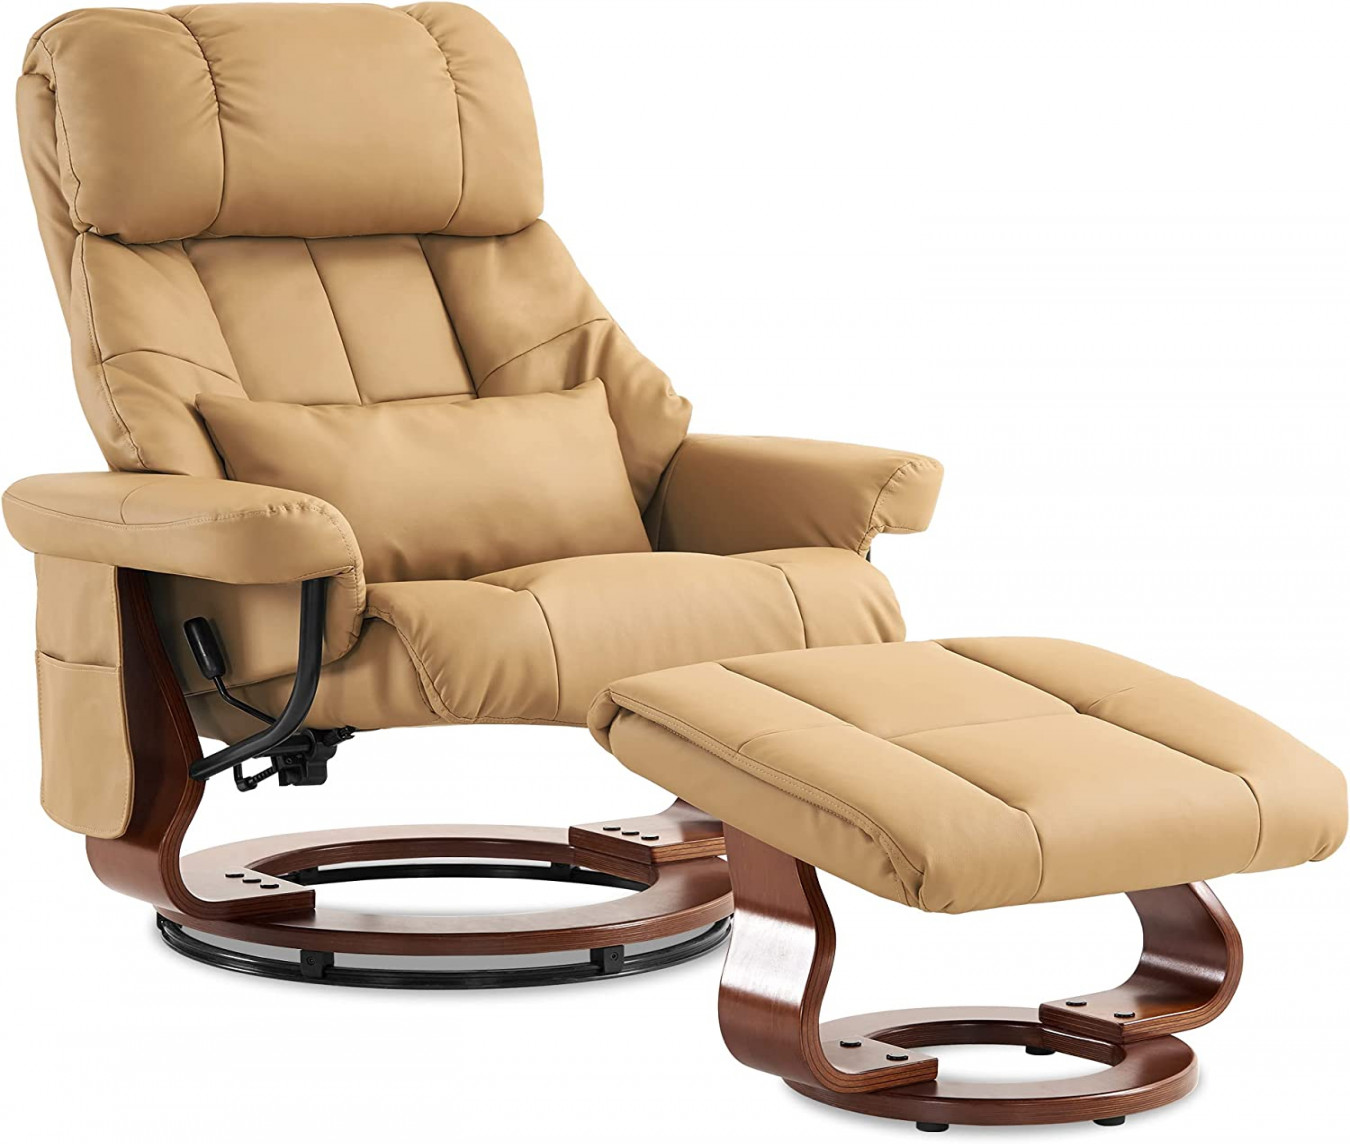 Massage Chair Recliners